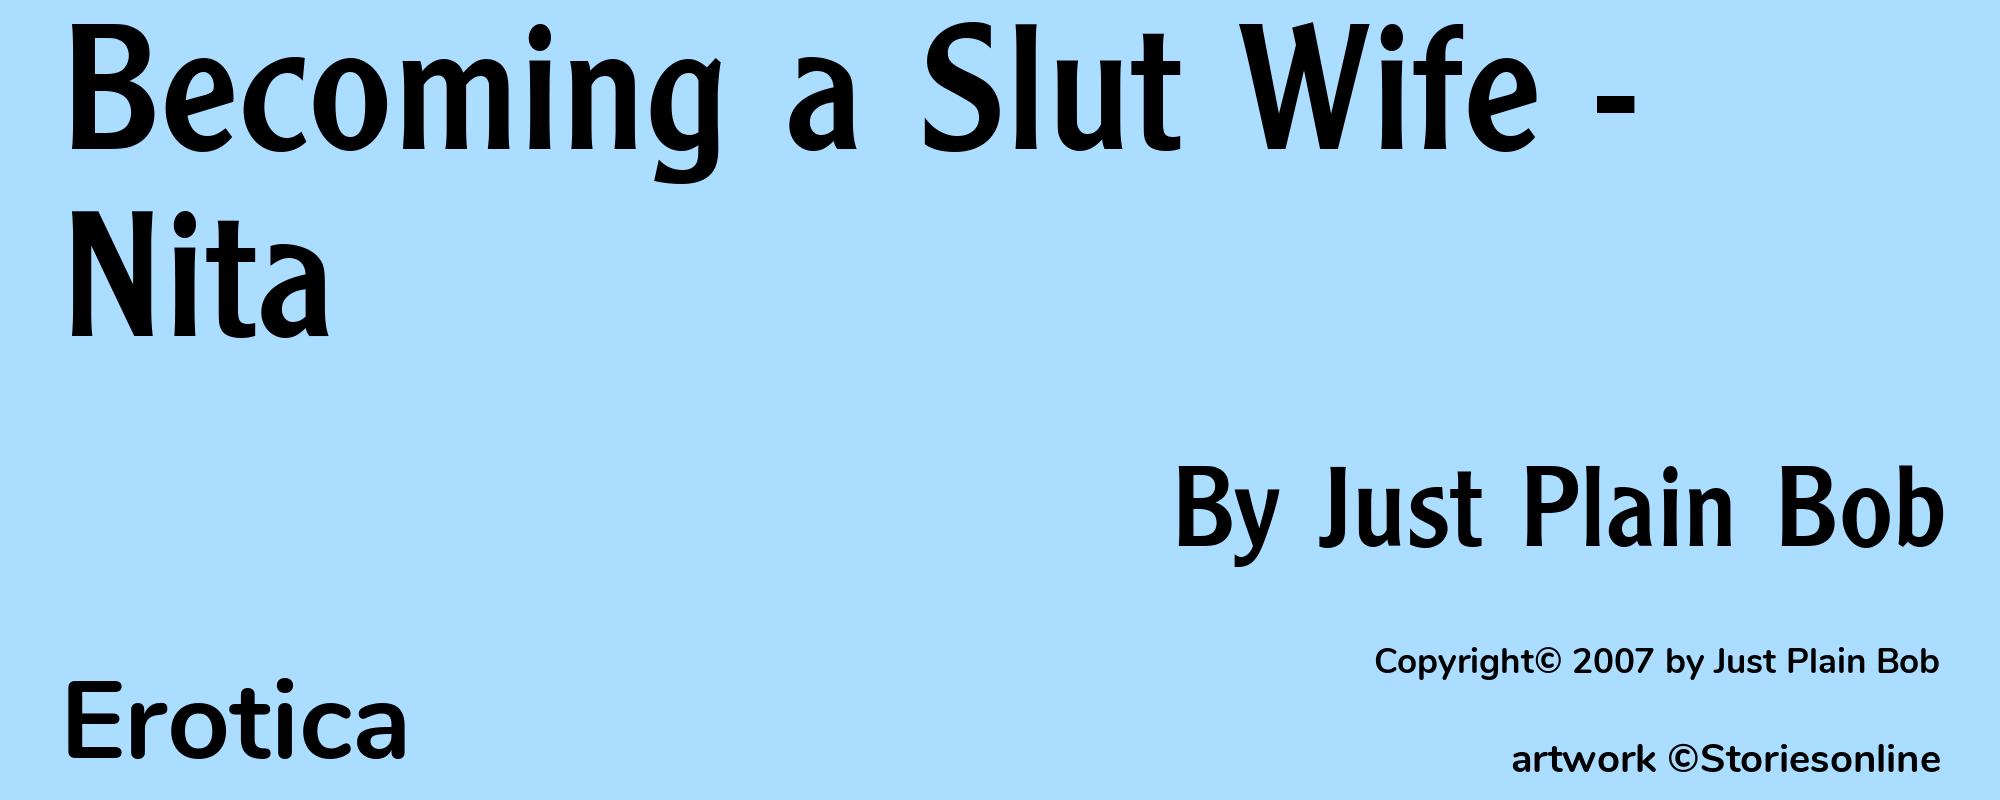 Becoming a Slut Wife - Nita - Cover